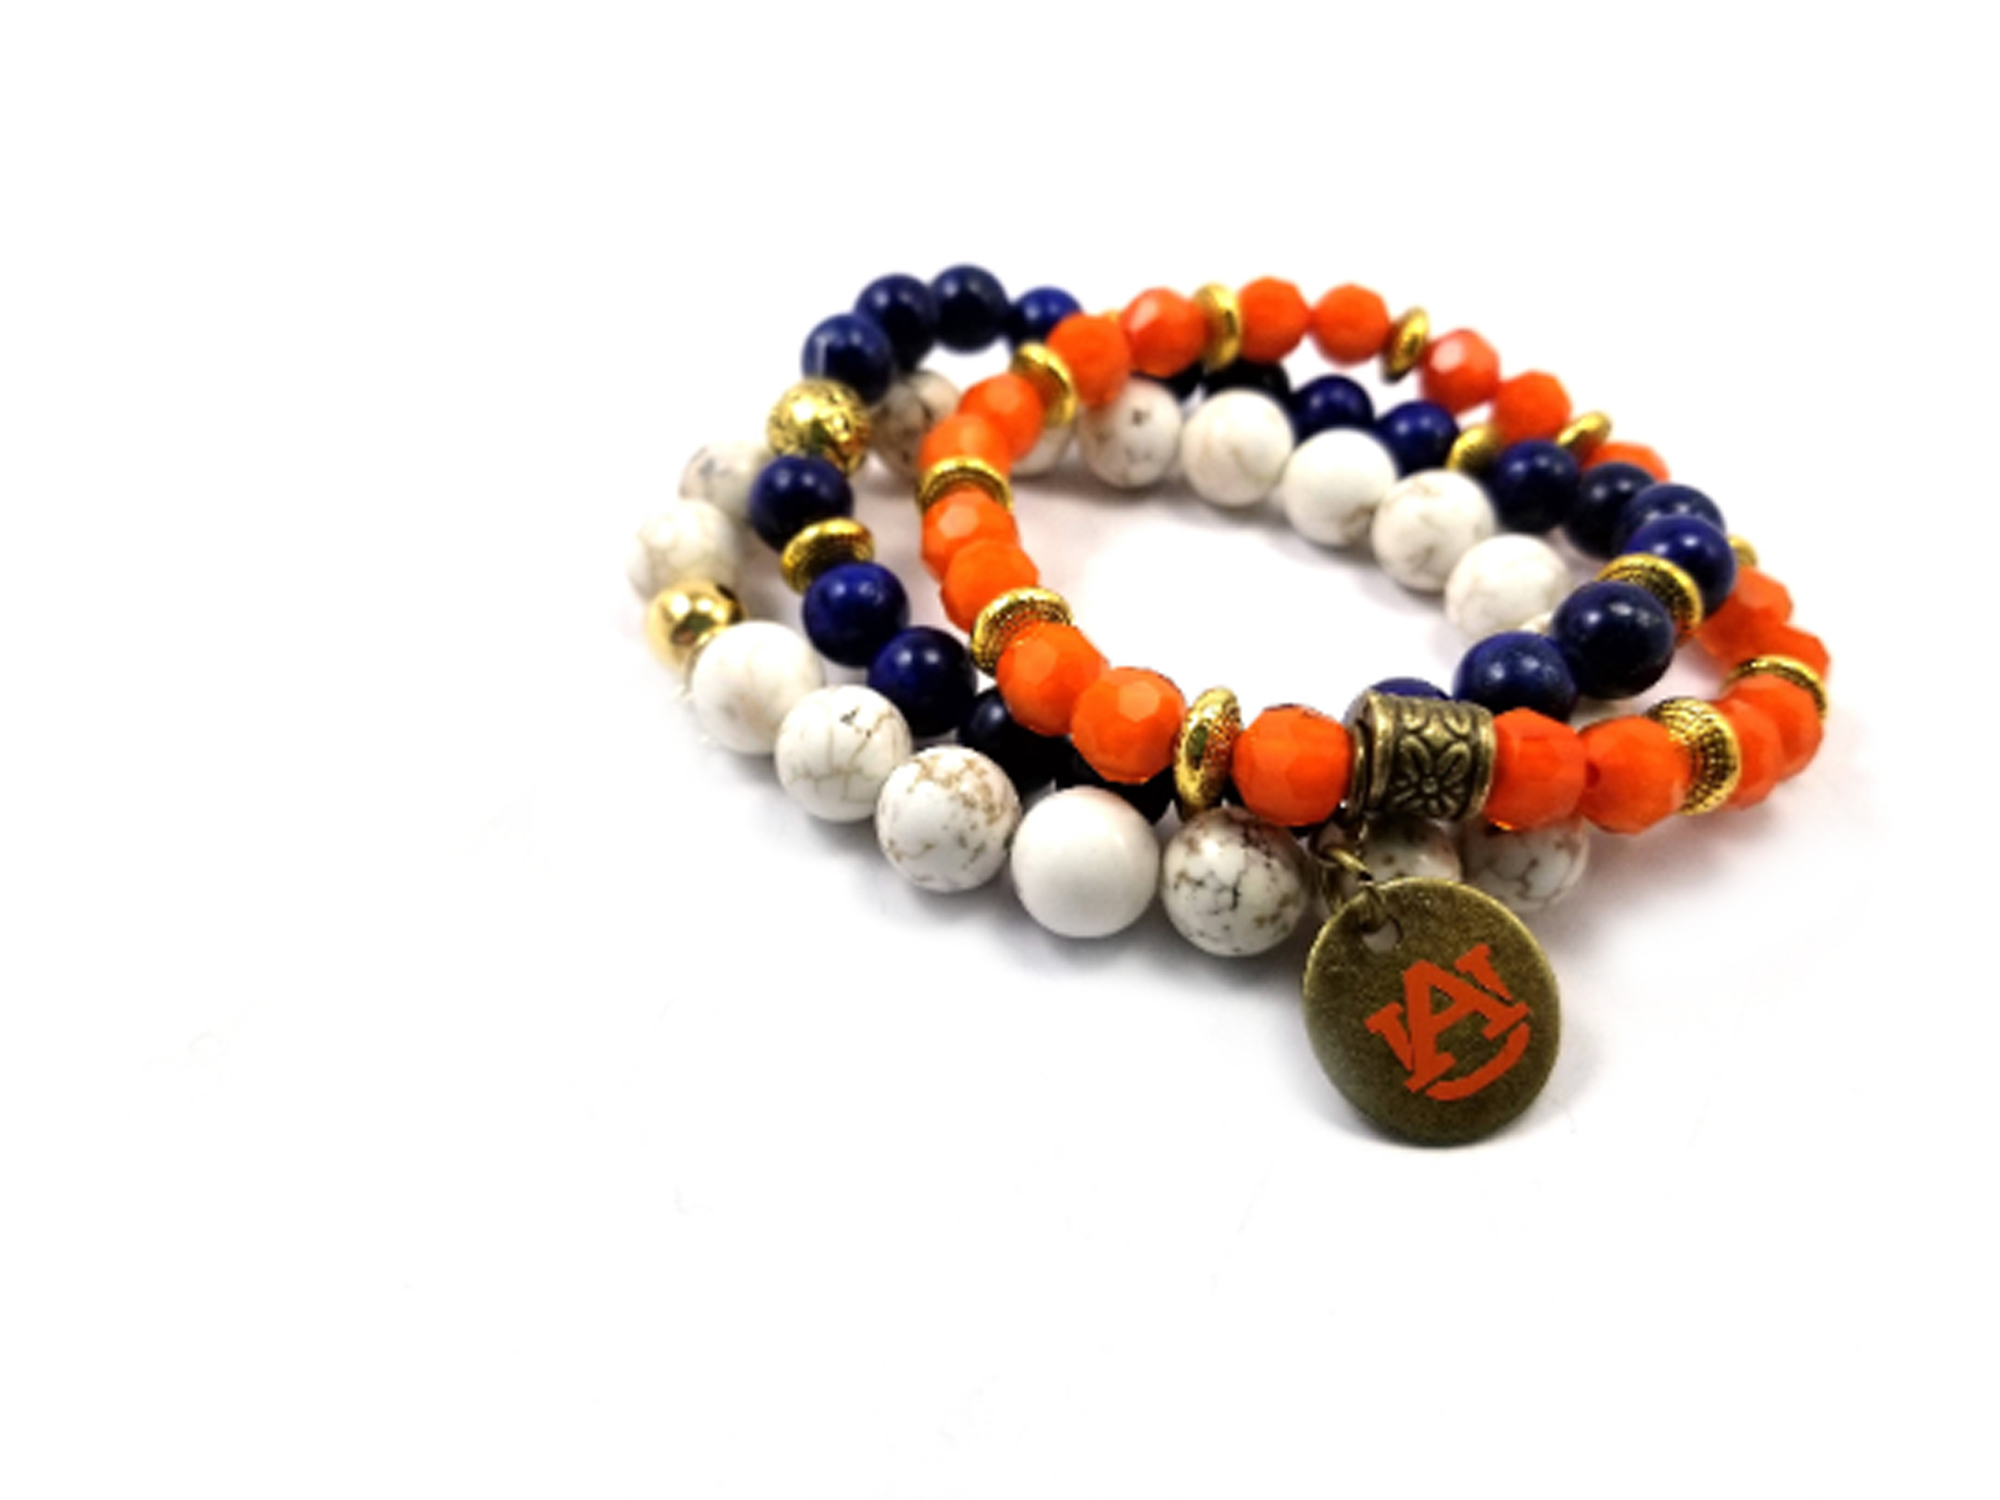 Auburn beaded bracelet set of 3 stretch bracelets, Auburn bracelets, Auburn game day jewelry, AU Tigers bracelets, AU orange and blue